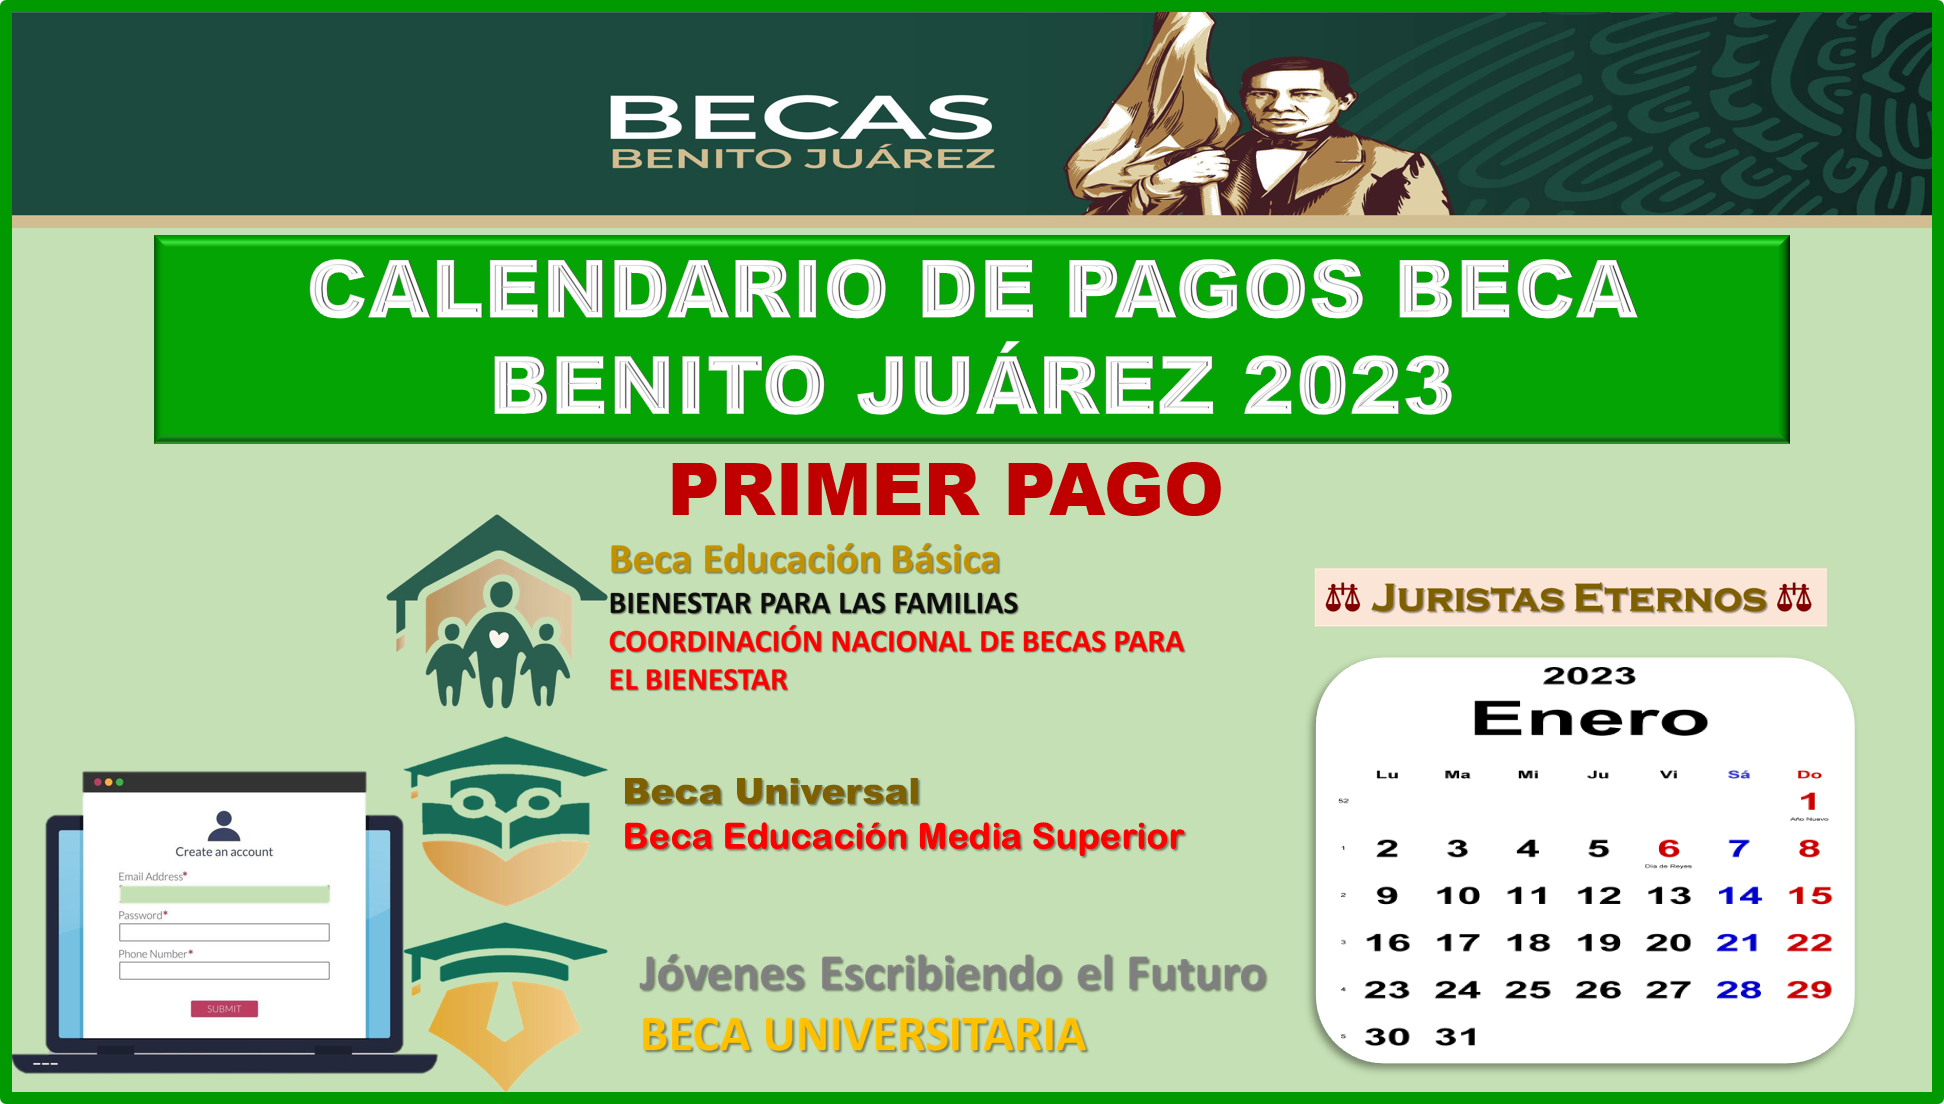 Calendario de pagos para los estudiantes: Beca Benito Juárez 2023, consúltalo aquí